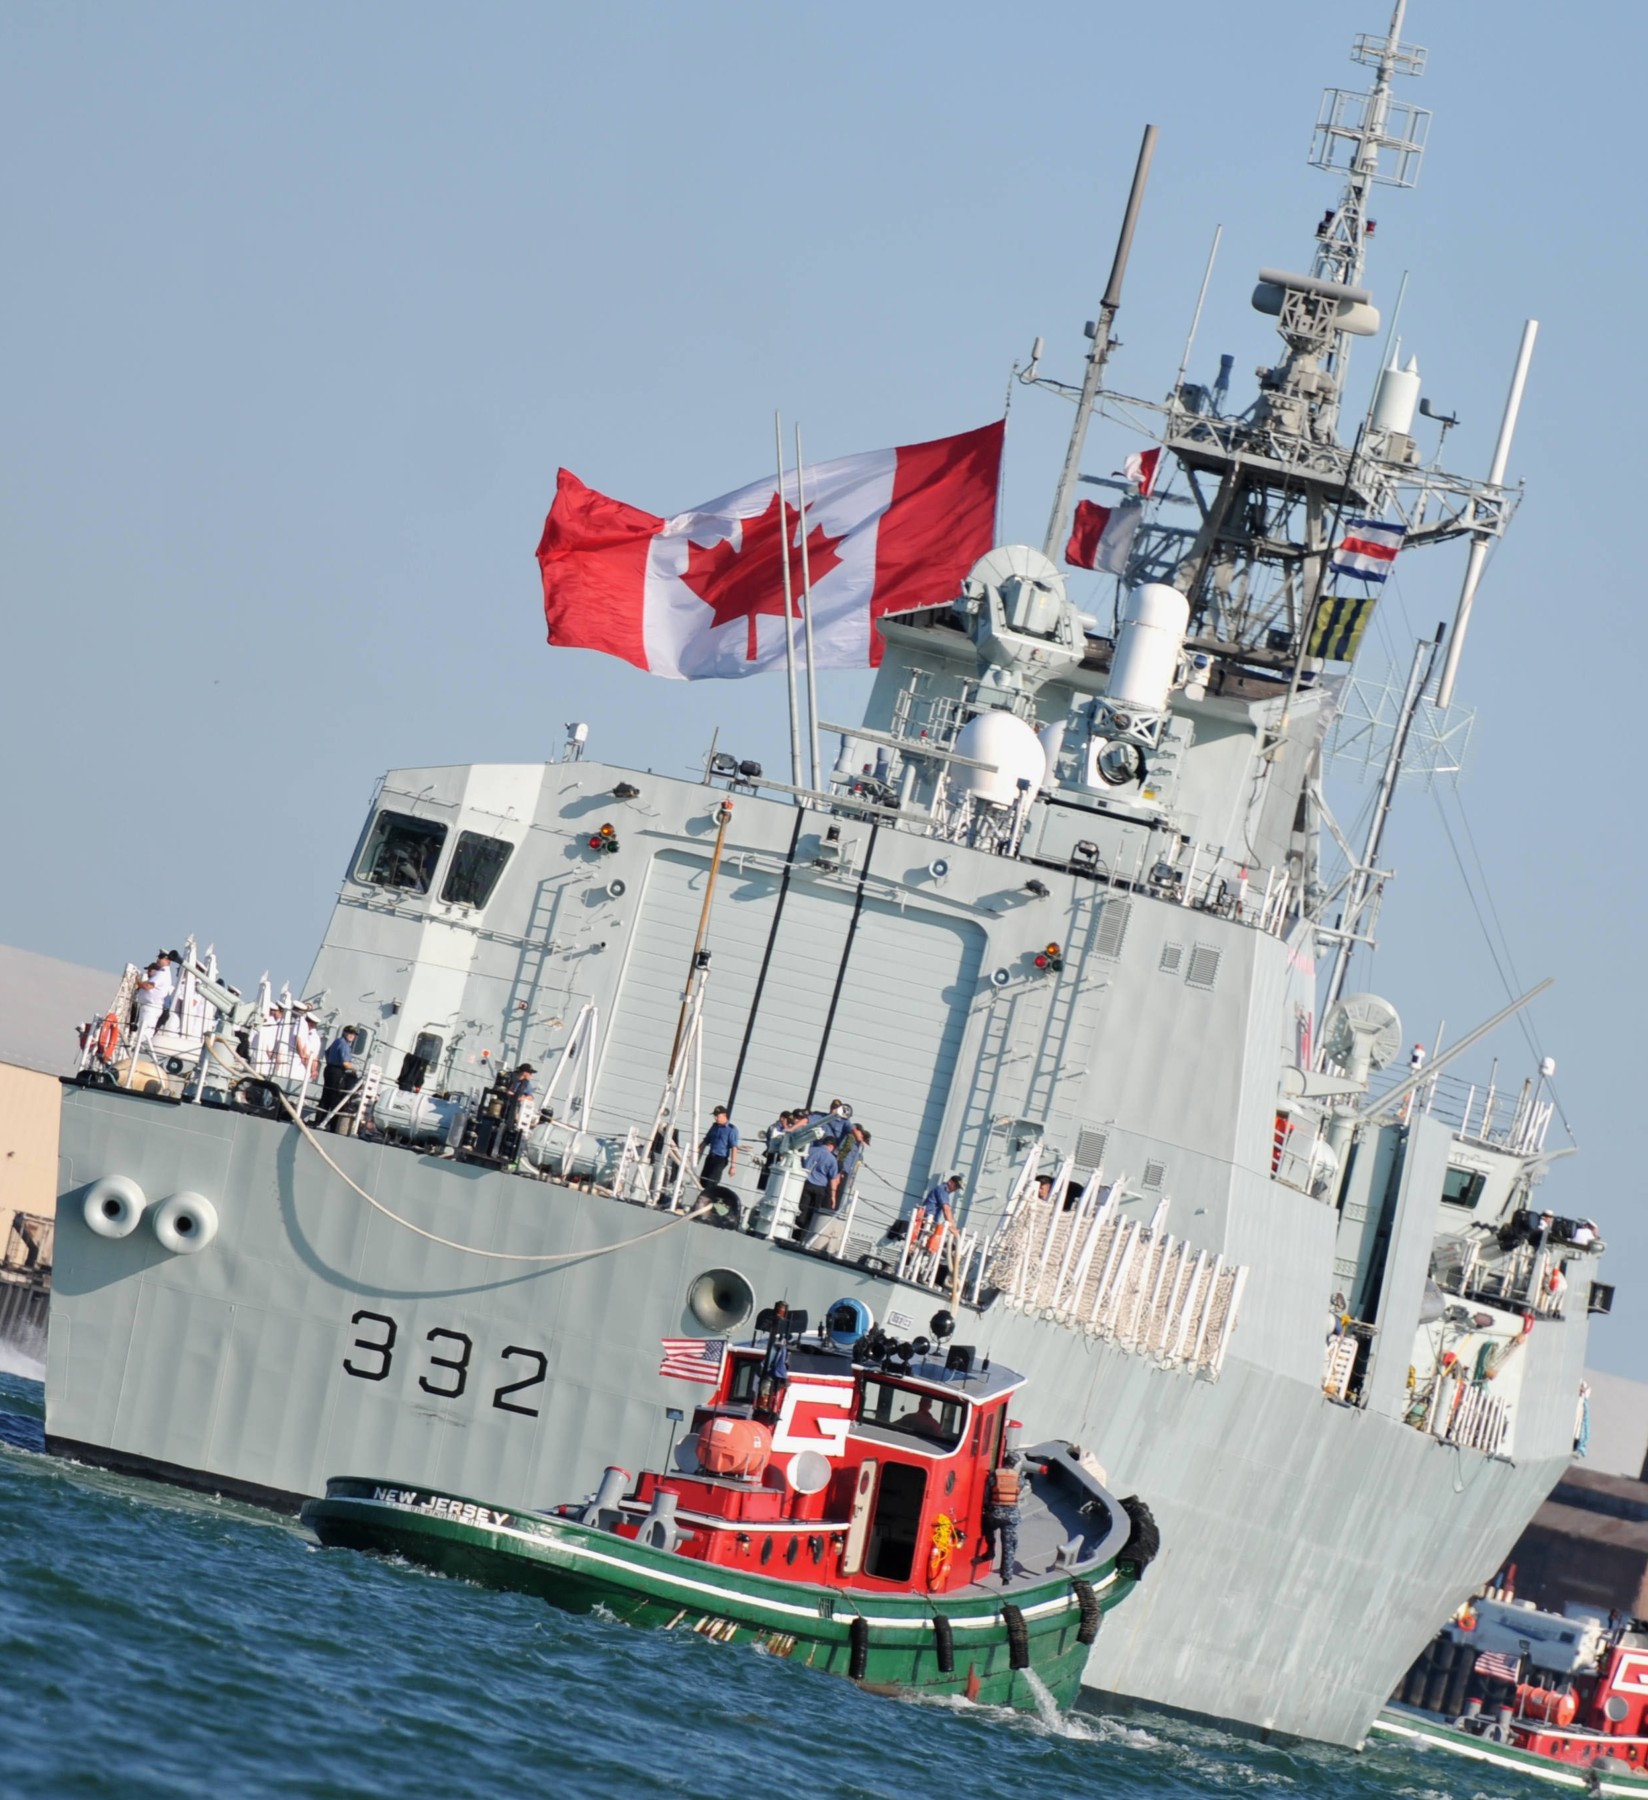 ffh-332 hmcs ville de quebec halifax class helicopter patrol frigate ncsm royal canadian navy 18